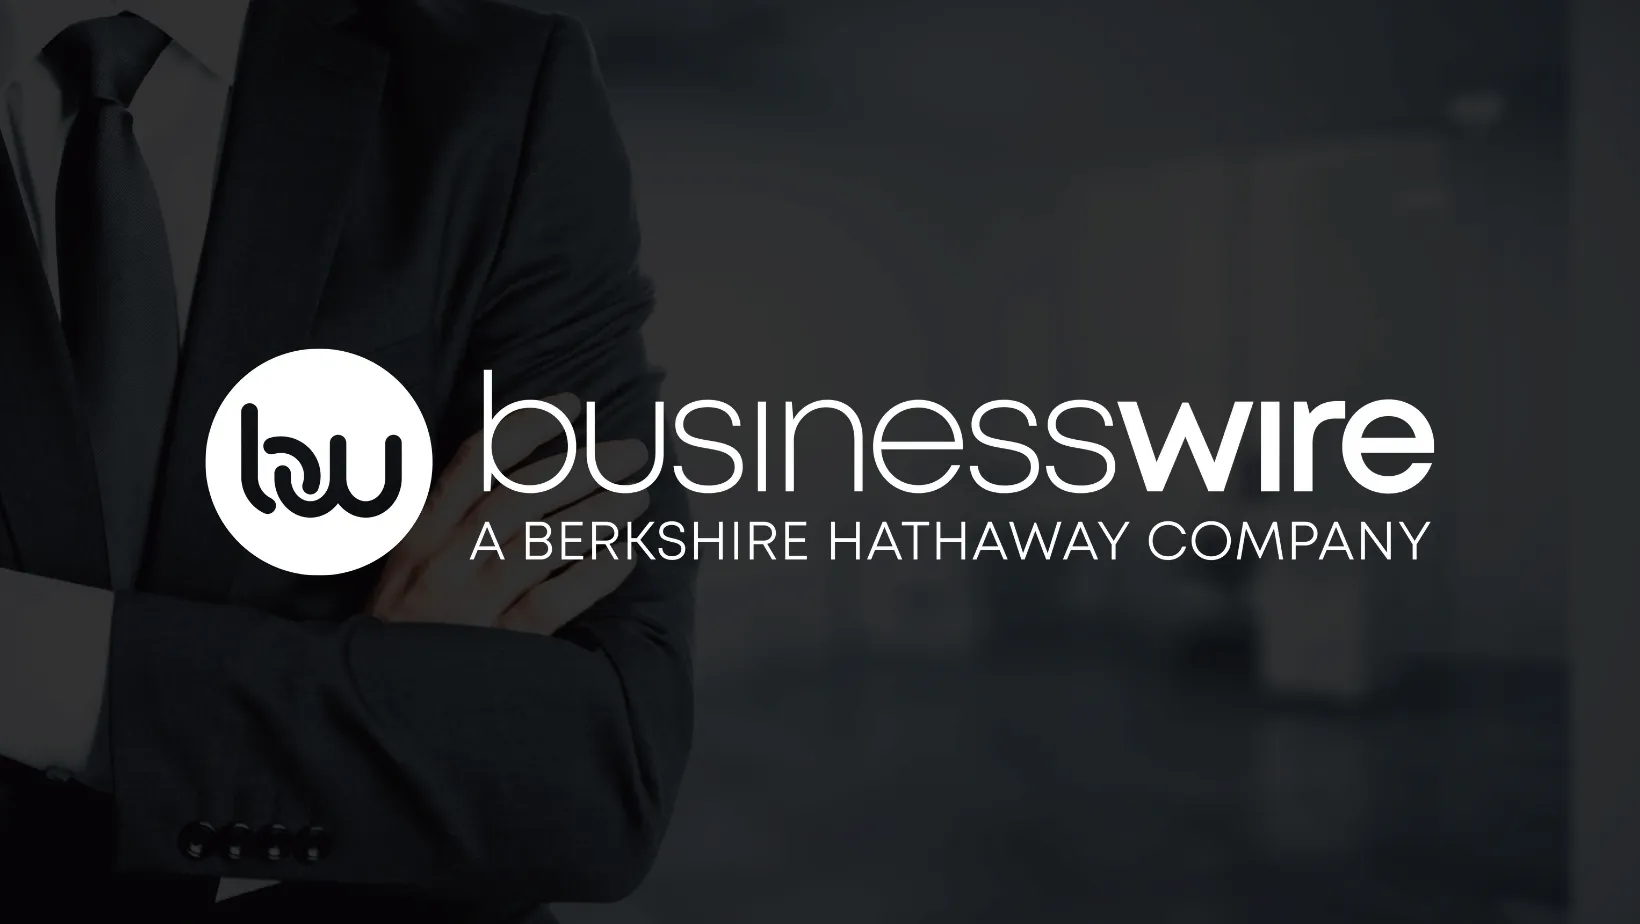 White Business Newswire logo over a dark background.